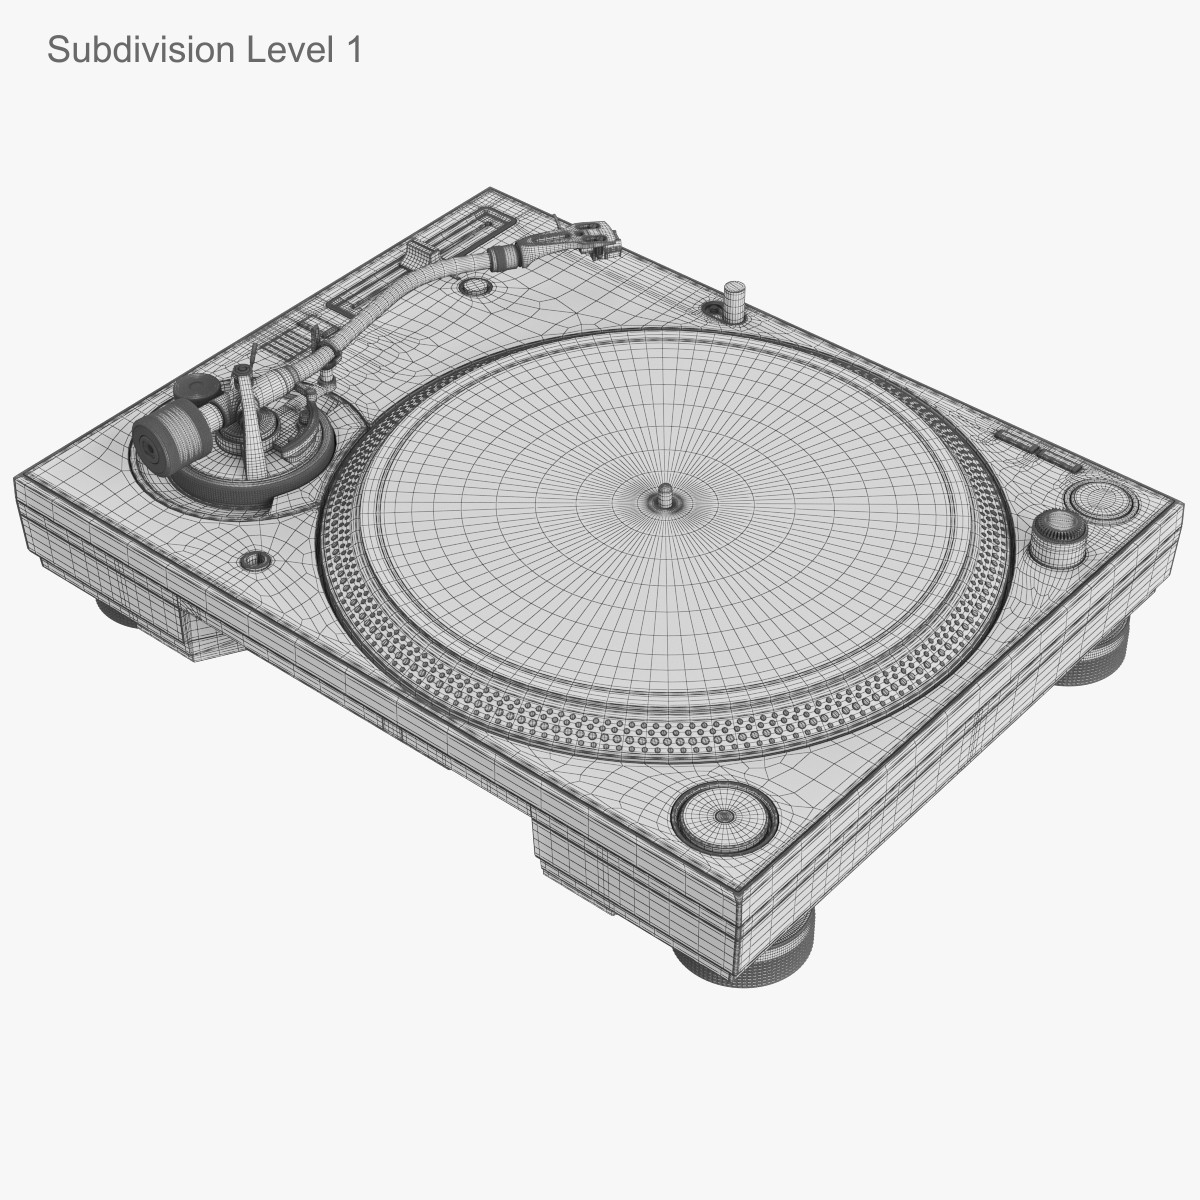 vinyl dj turntable Render Pioner player mixtable equipment 3D vray model realistic